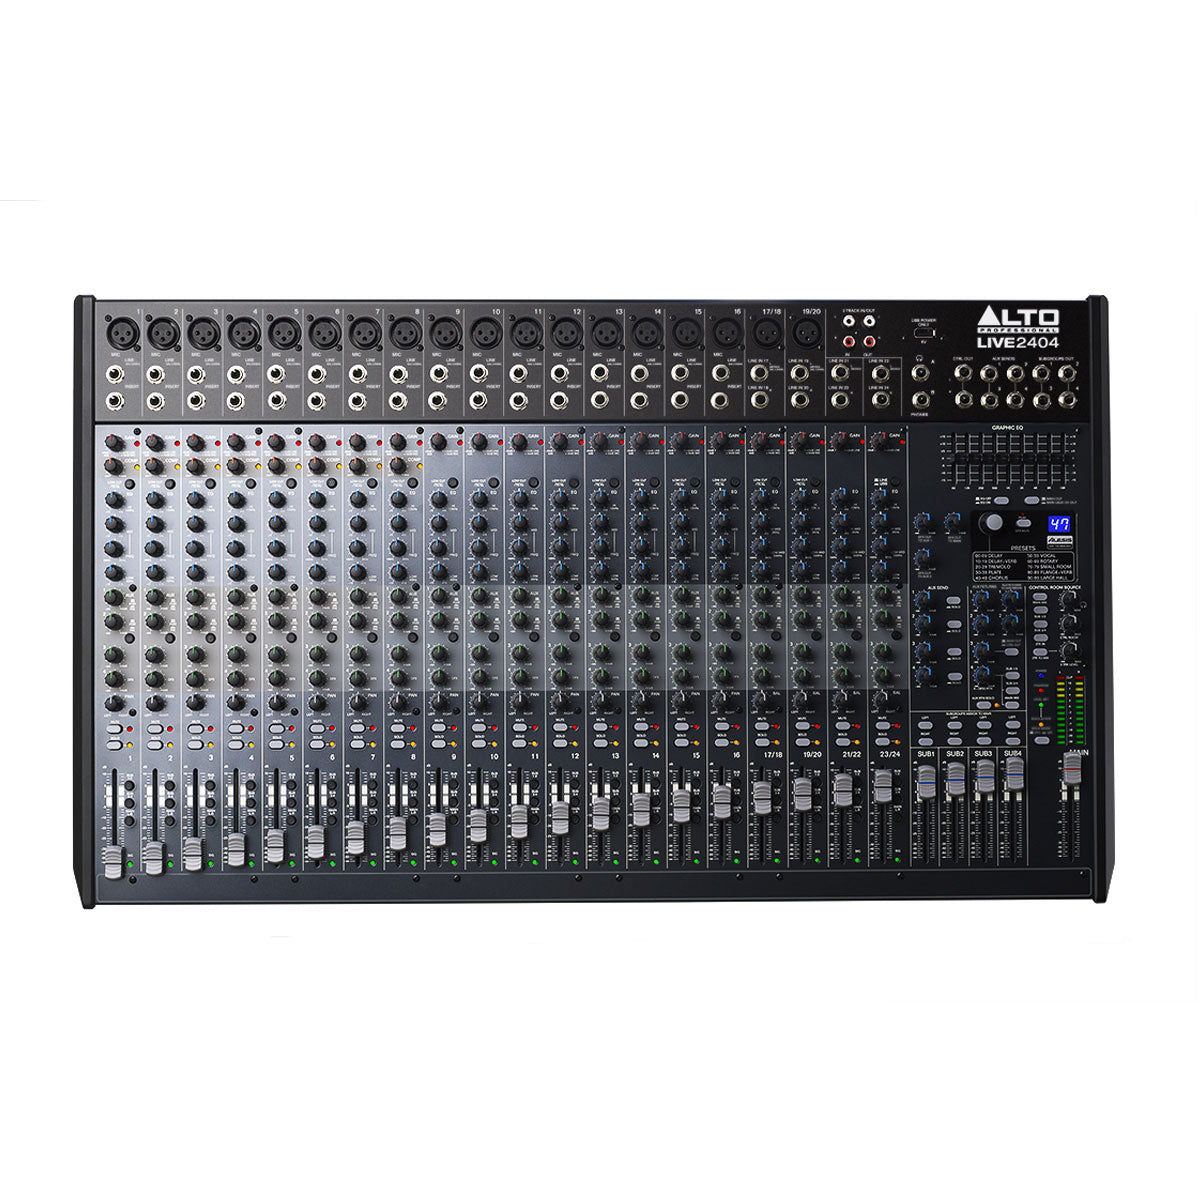 Alto Professional LIVE2404 Professional 24-Channel/4-Bus Mixer